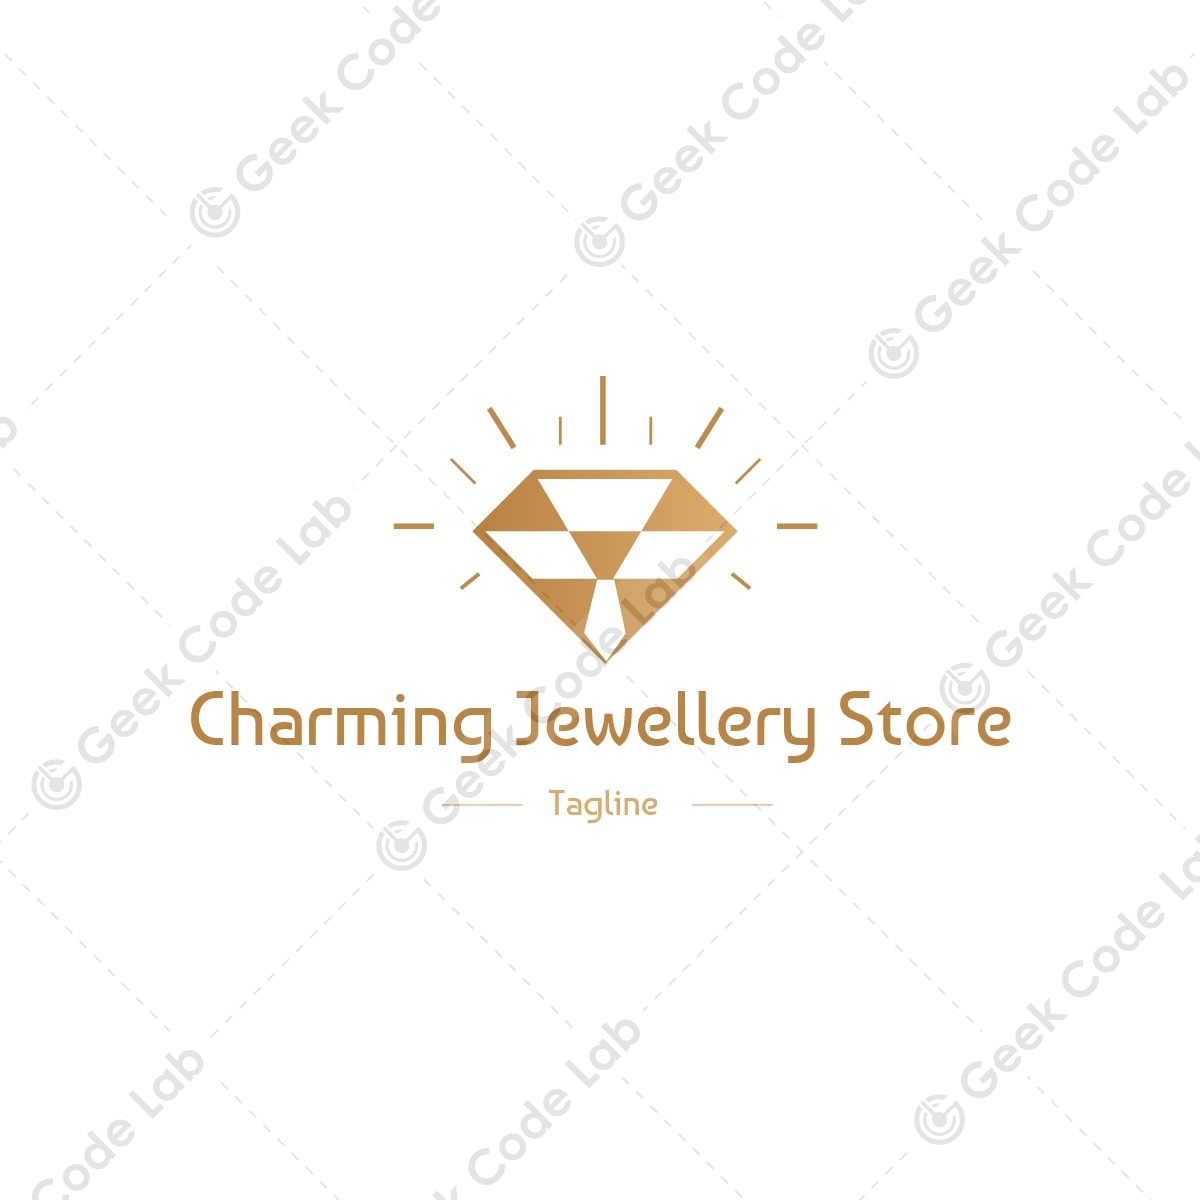 Charming Jewellery Store